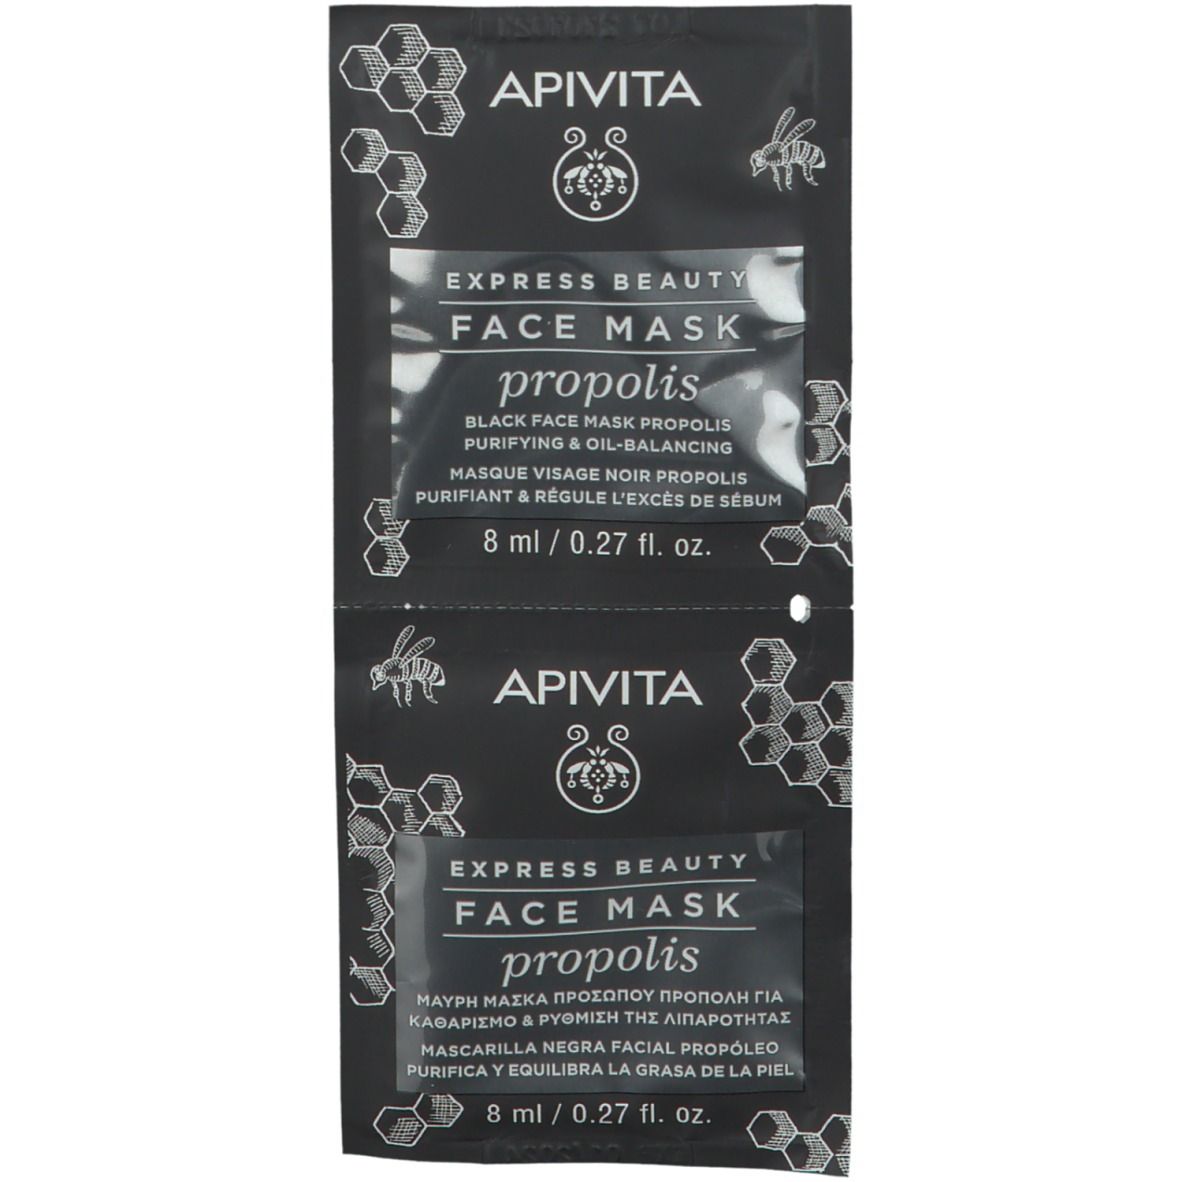 Apivita Express Beauty Masque de beauté propolis